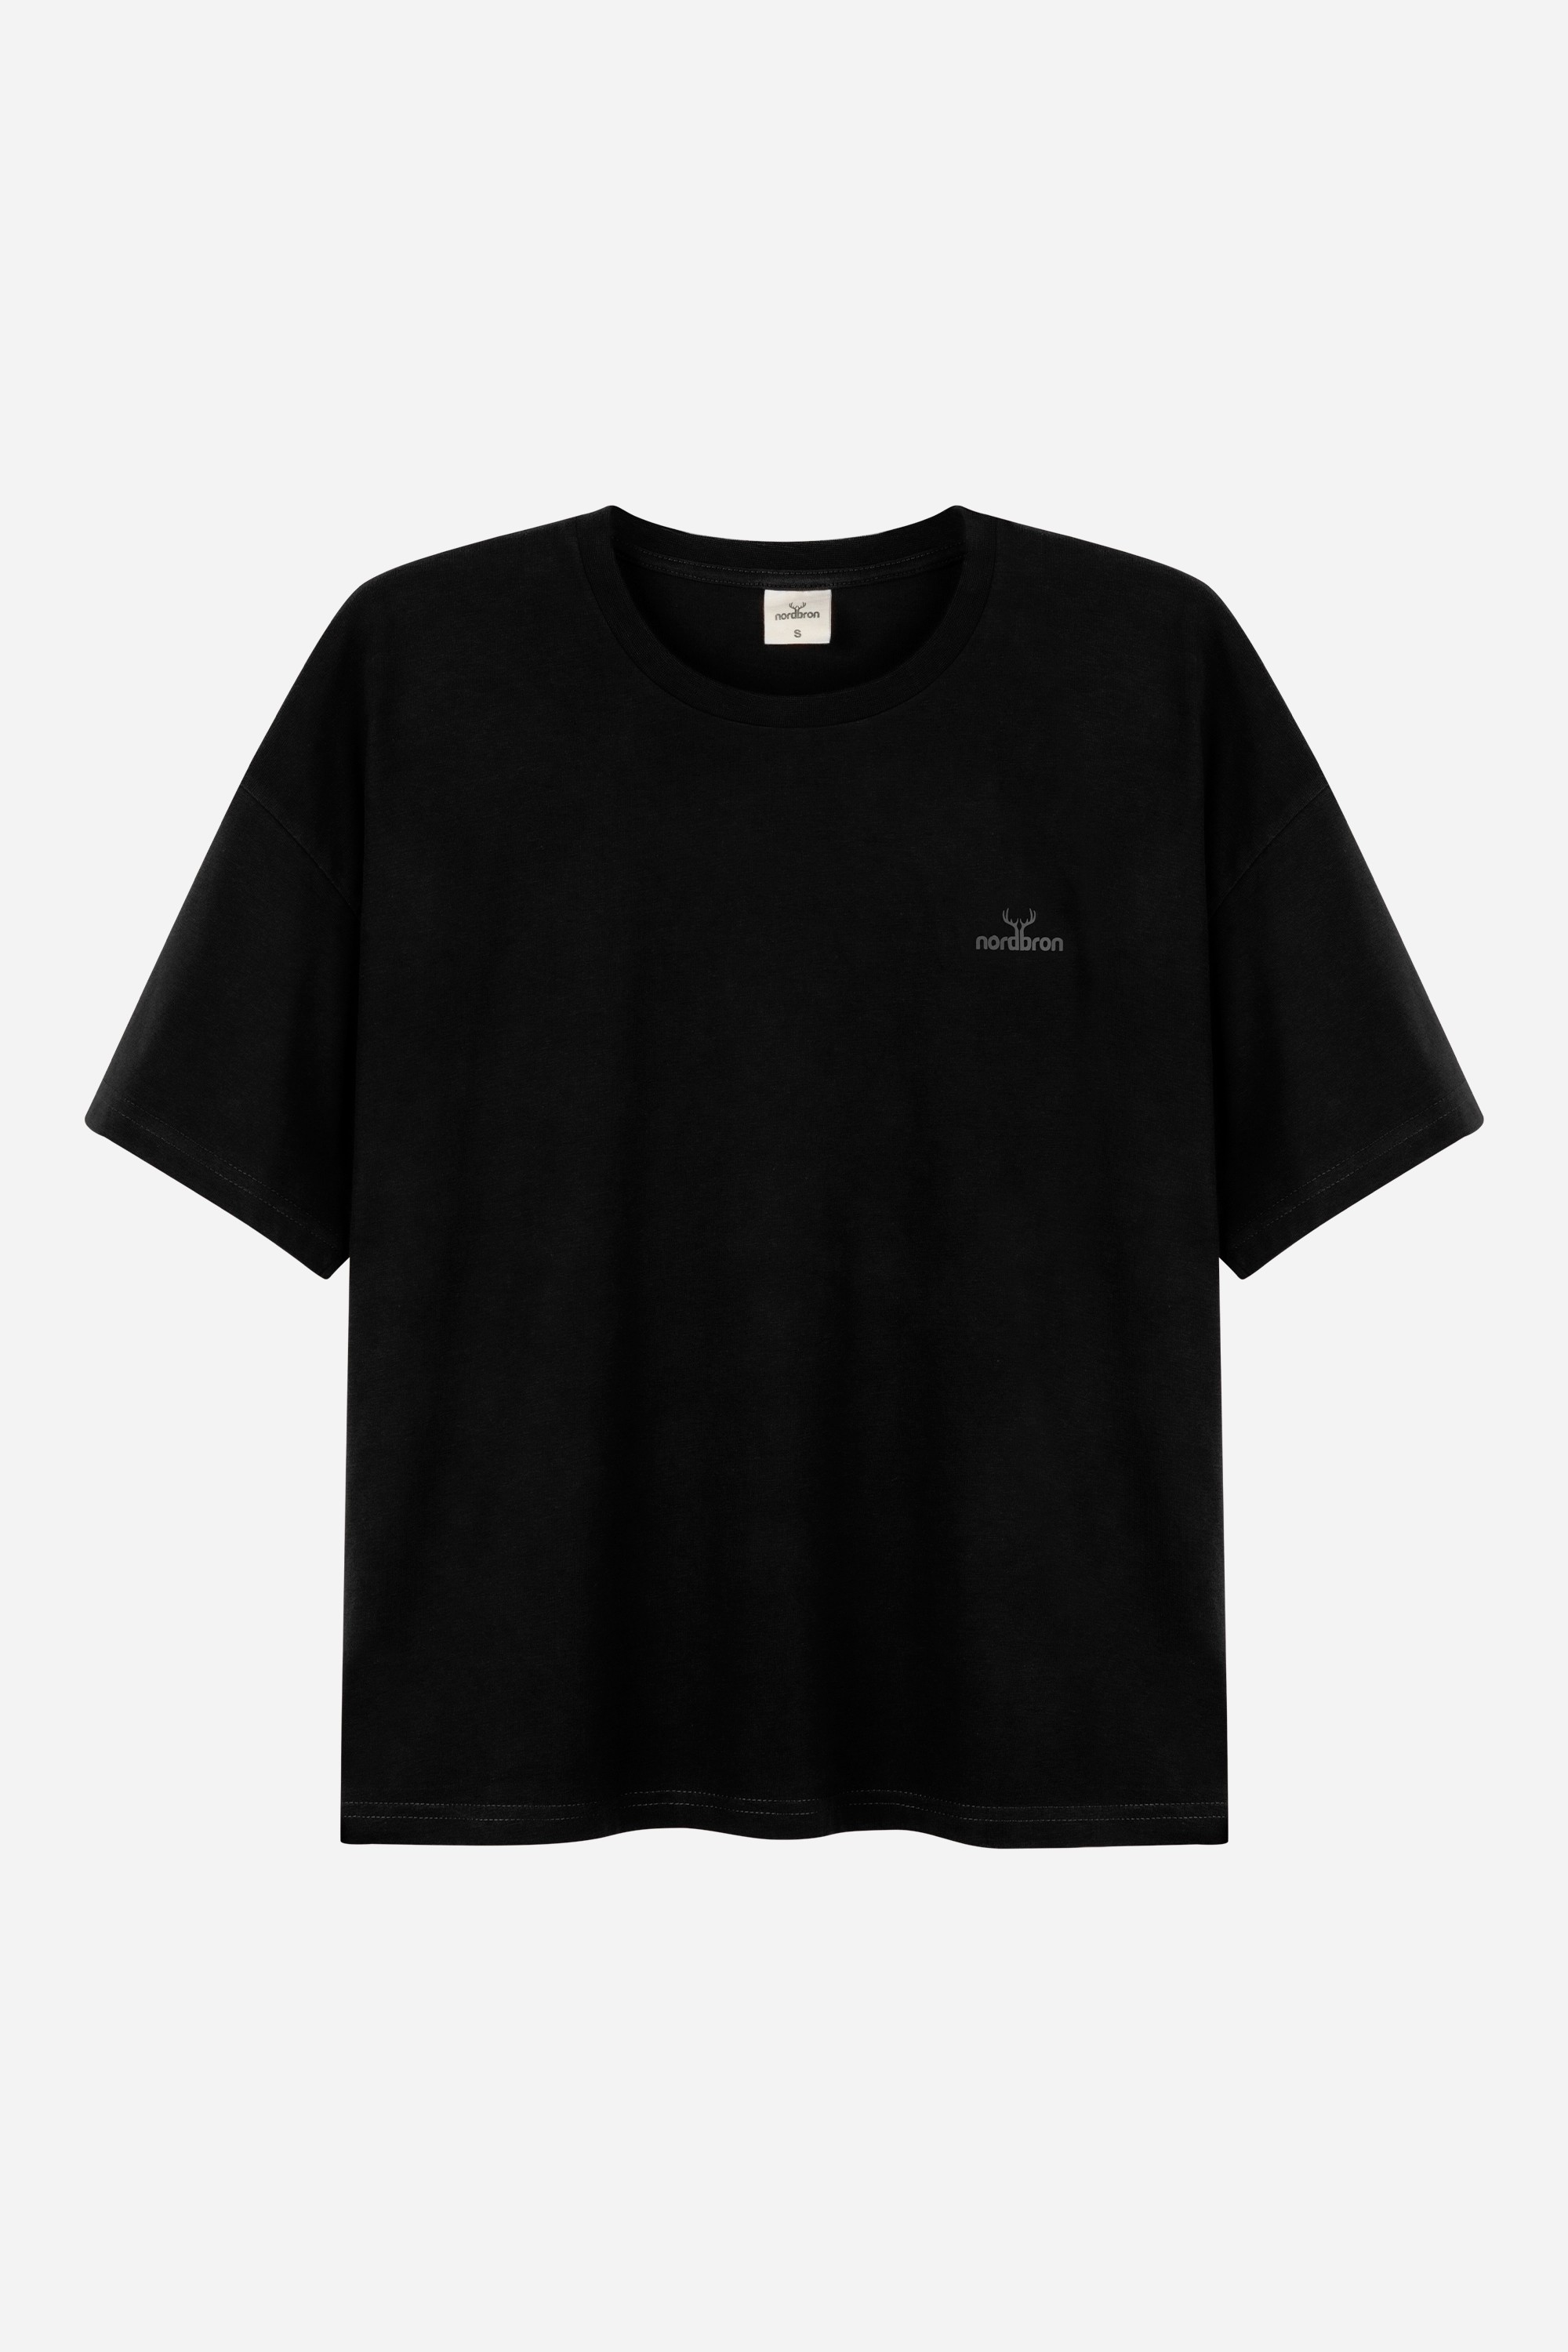 Kramer Nordbron Oversize T-shirt - Black